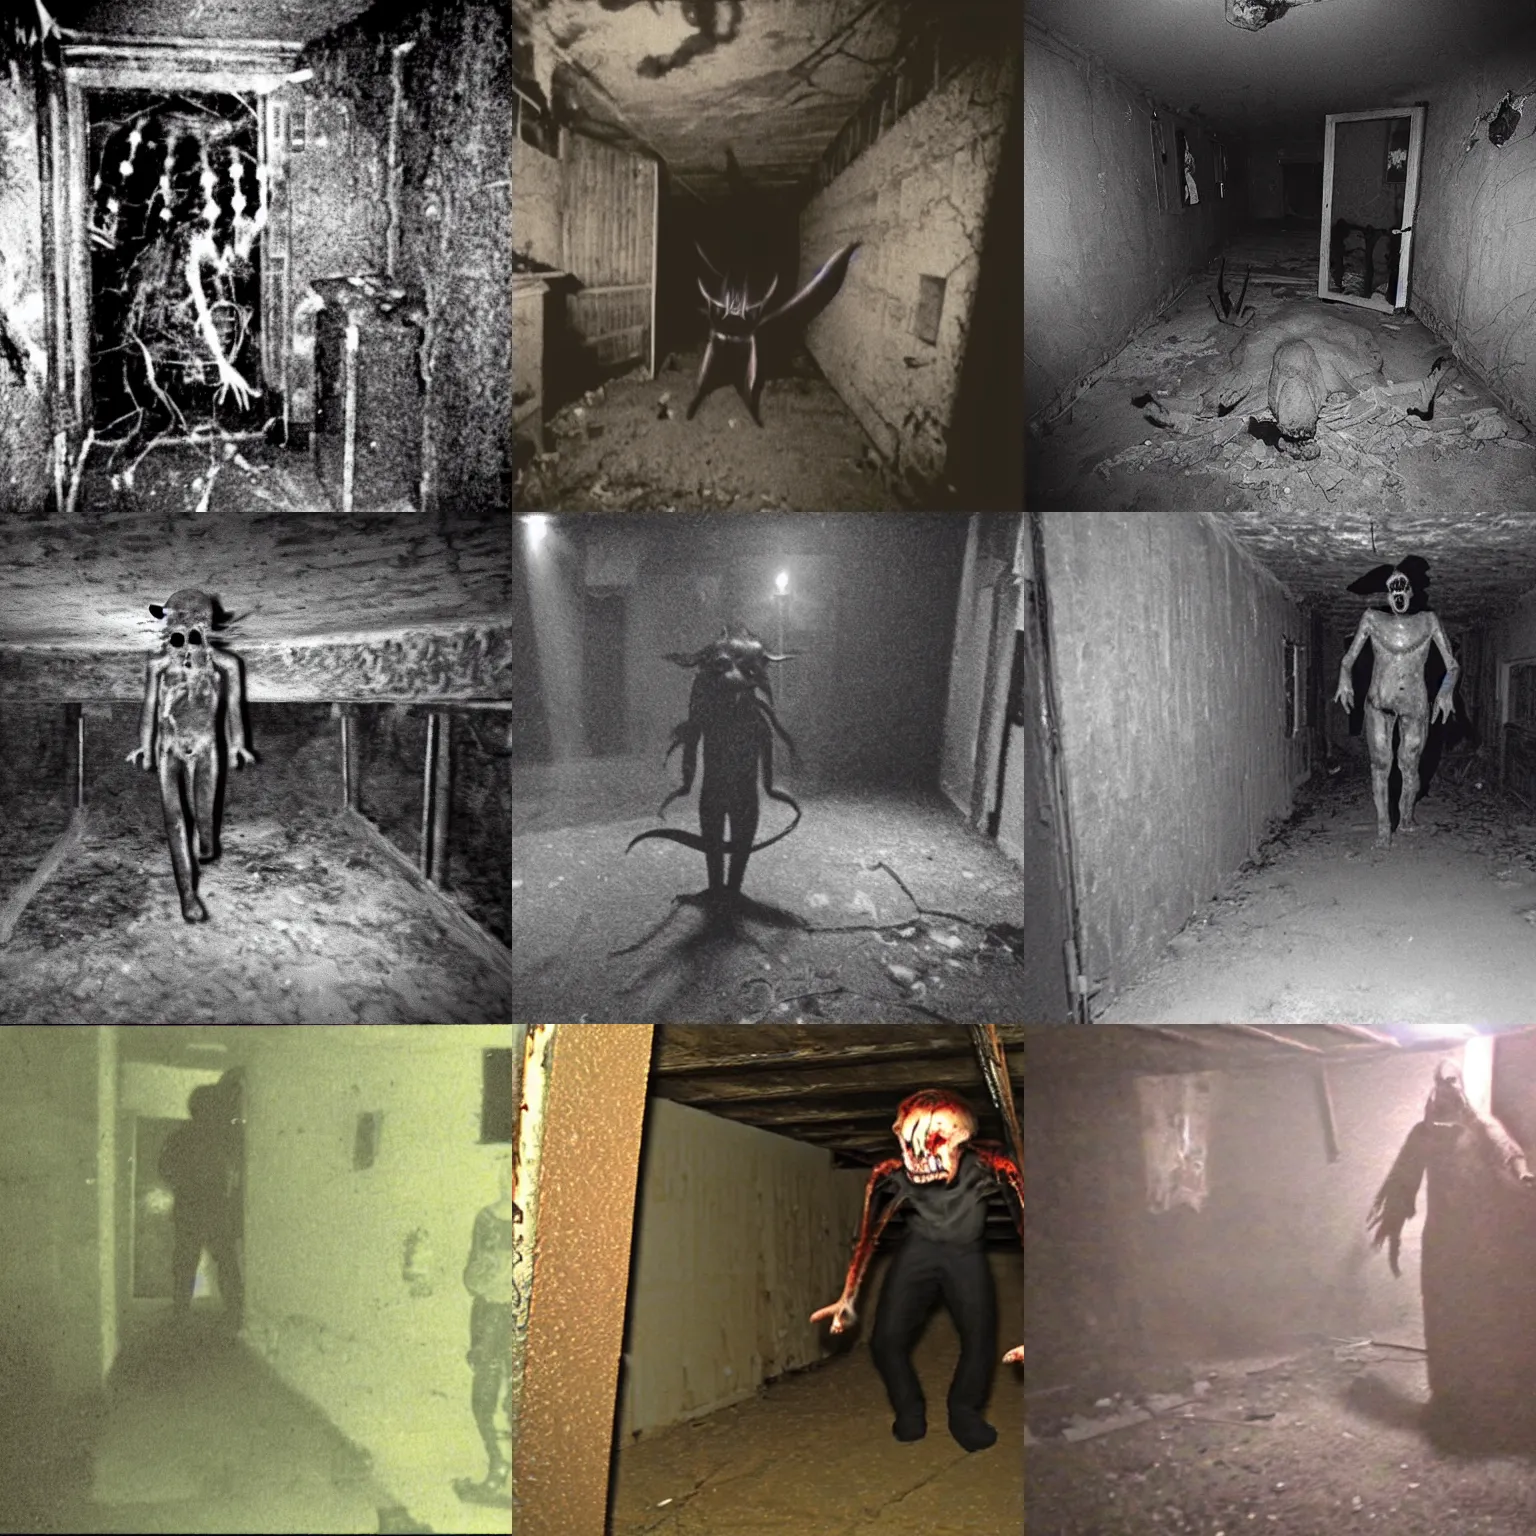 Prompt: terrifying found footage of a disturbing demon in a dark basement